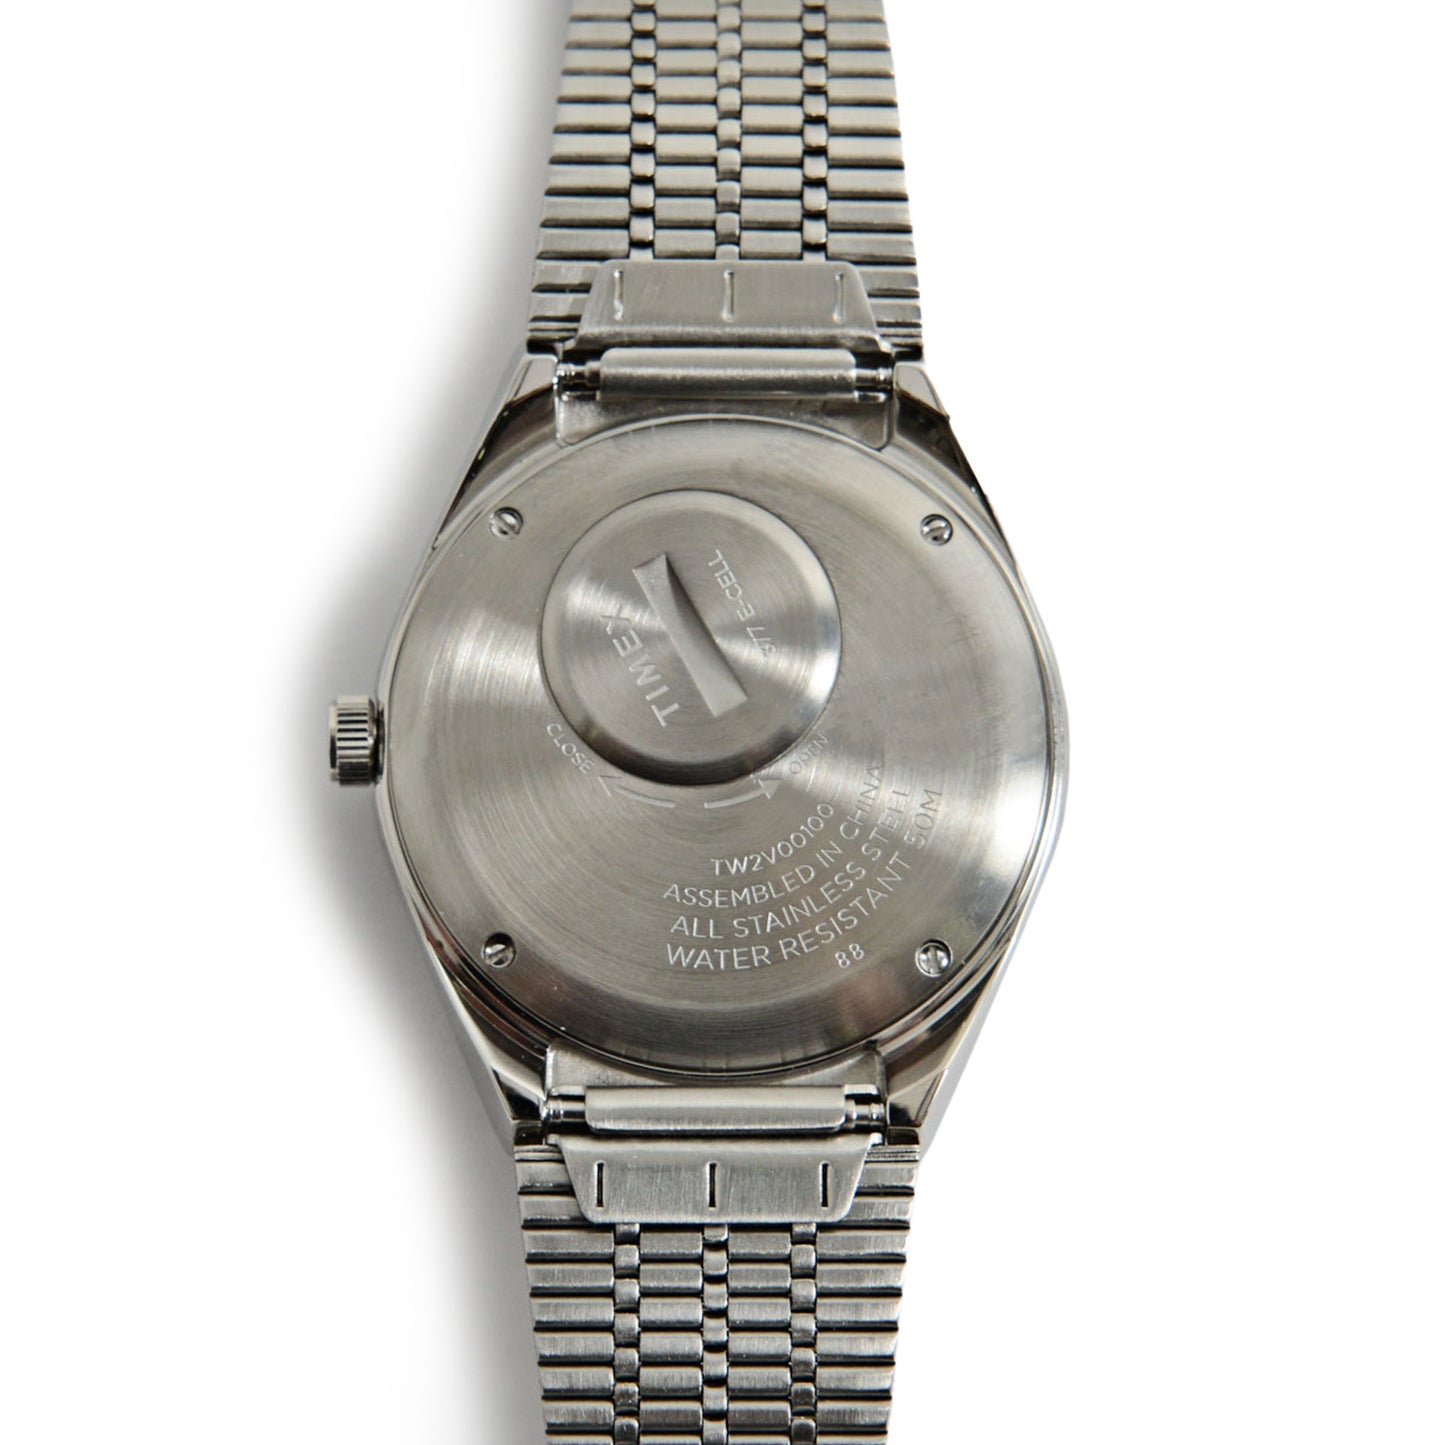 Timex Stainless Bezel Q Watch